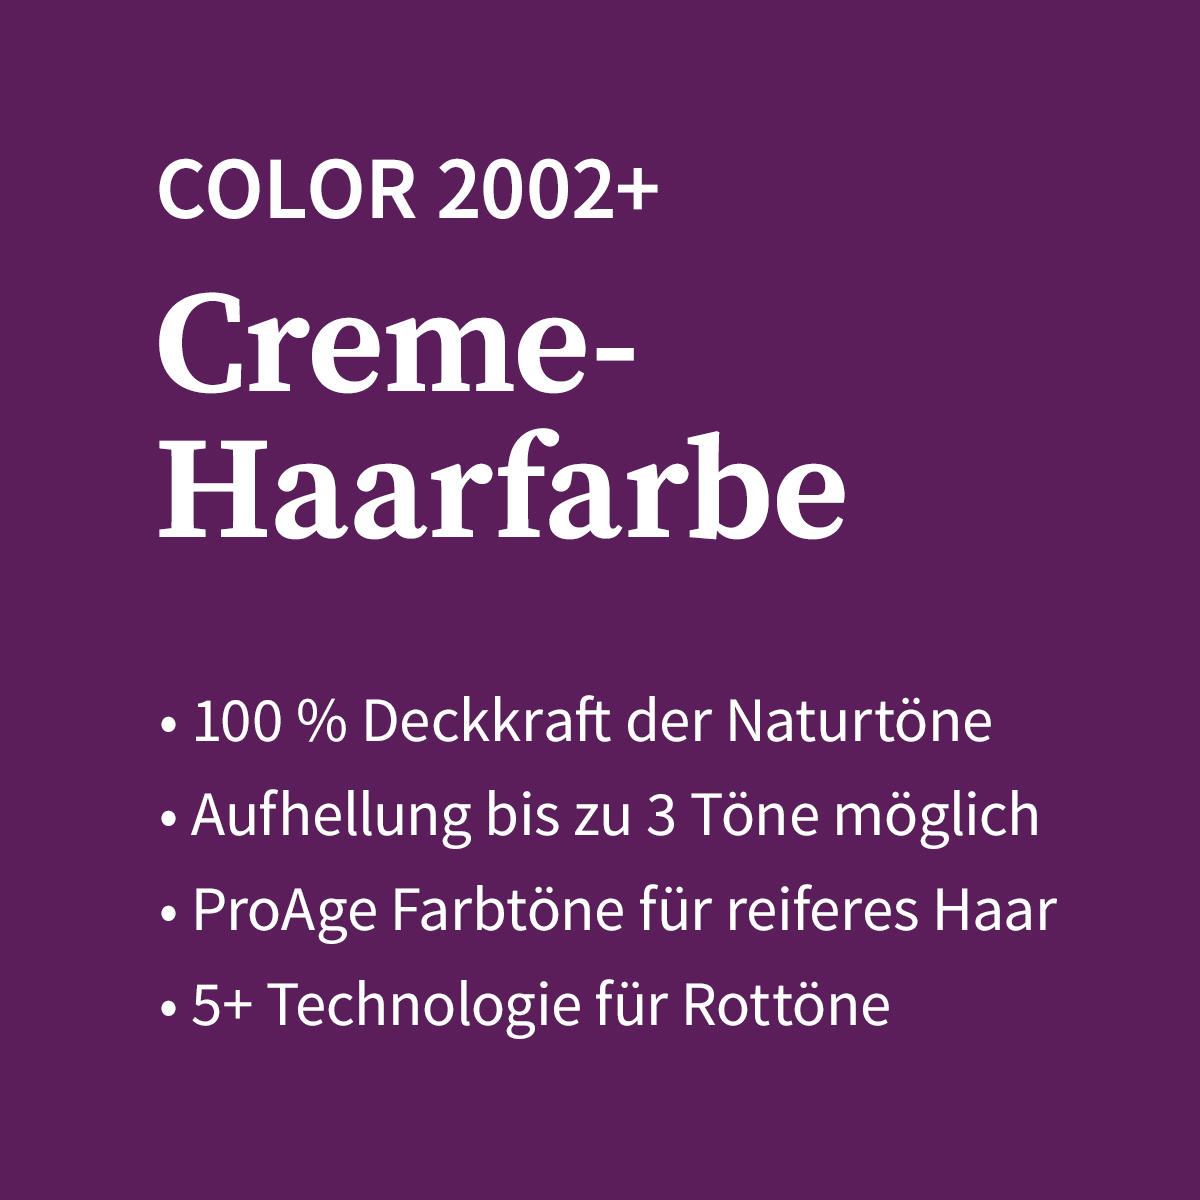 Basler Color 2002+ Cremehaarfarbe 7/i mittelblond intensiv, Tube 60 ml - 4